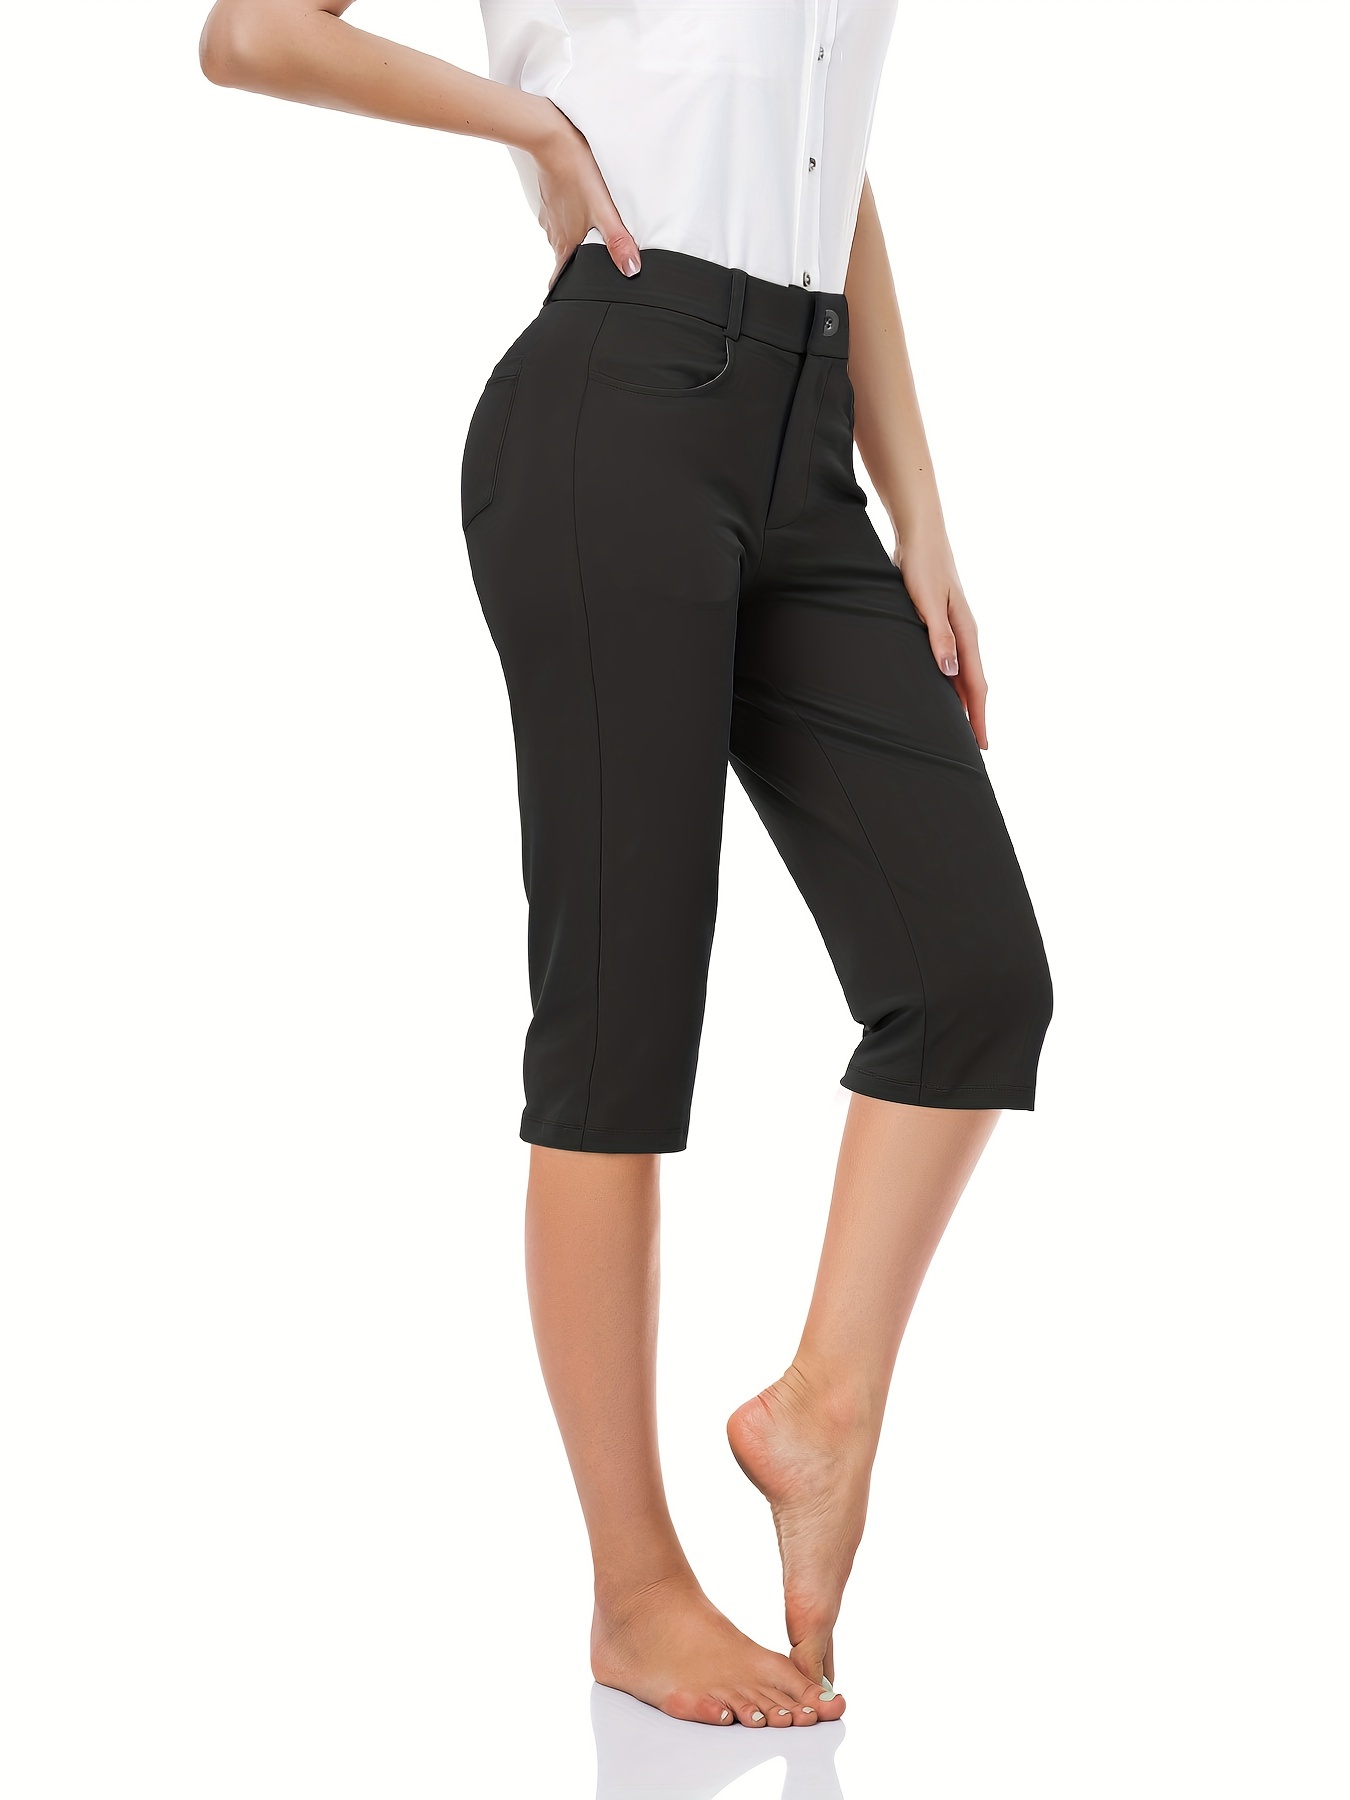 Ibeauti Womens UPF 50 Skirted Capri Leggings Yoga Pants with Skirt Pockets  for Tennis Running Workout Active Black XLarge price in UAE  Amazon  UAE  kanbkam